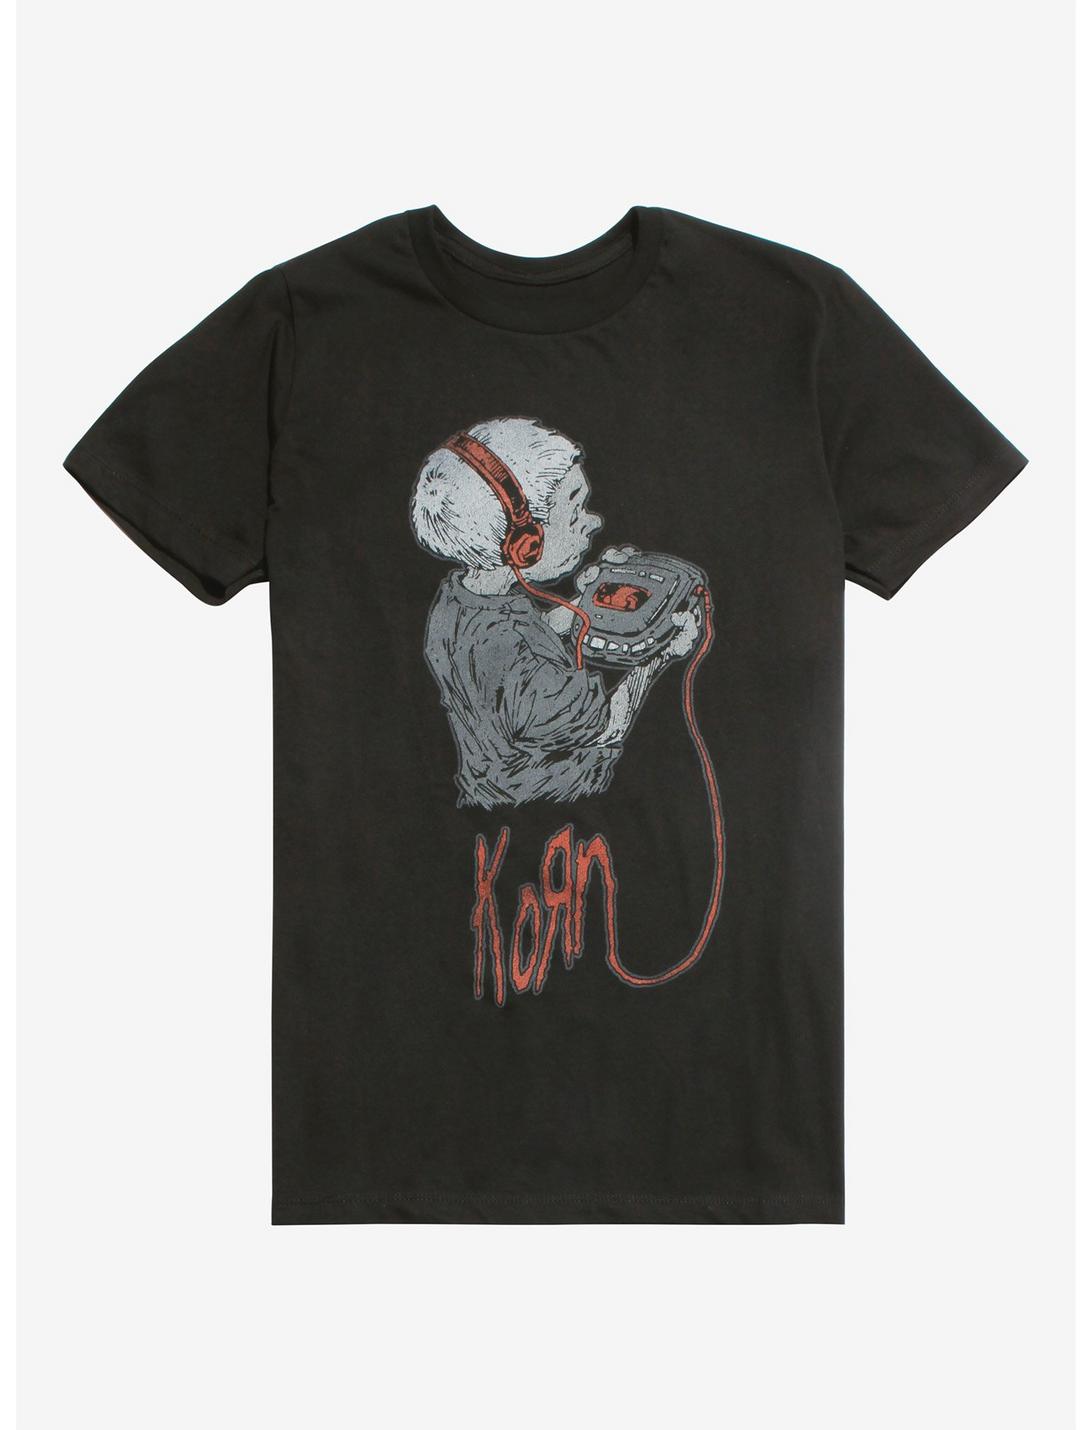 Korn Portable CD Player T-Shirt, BLACK, hi-res